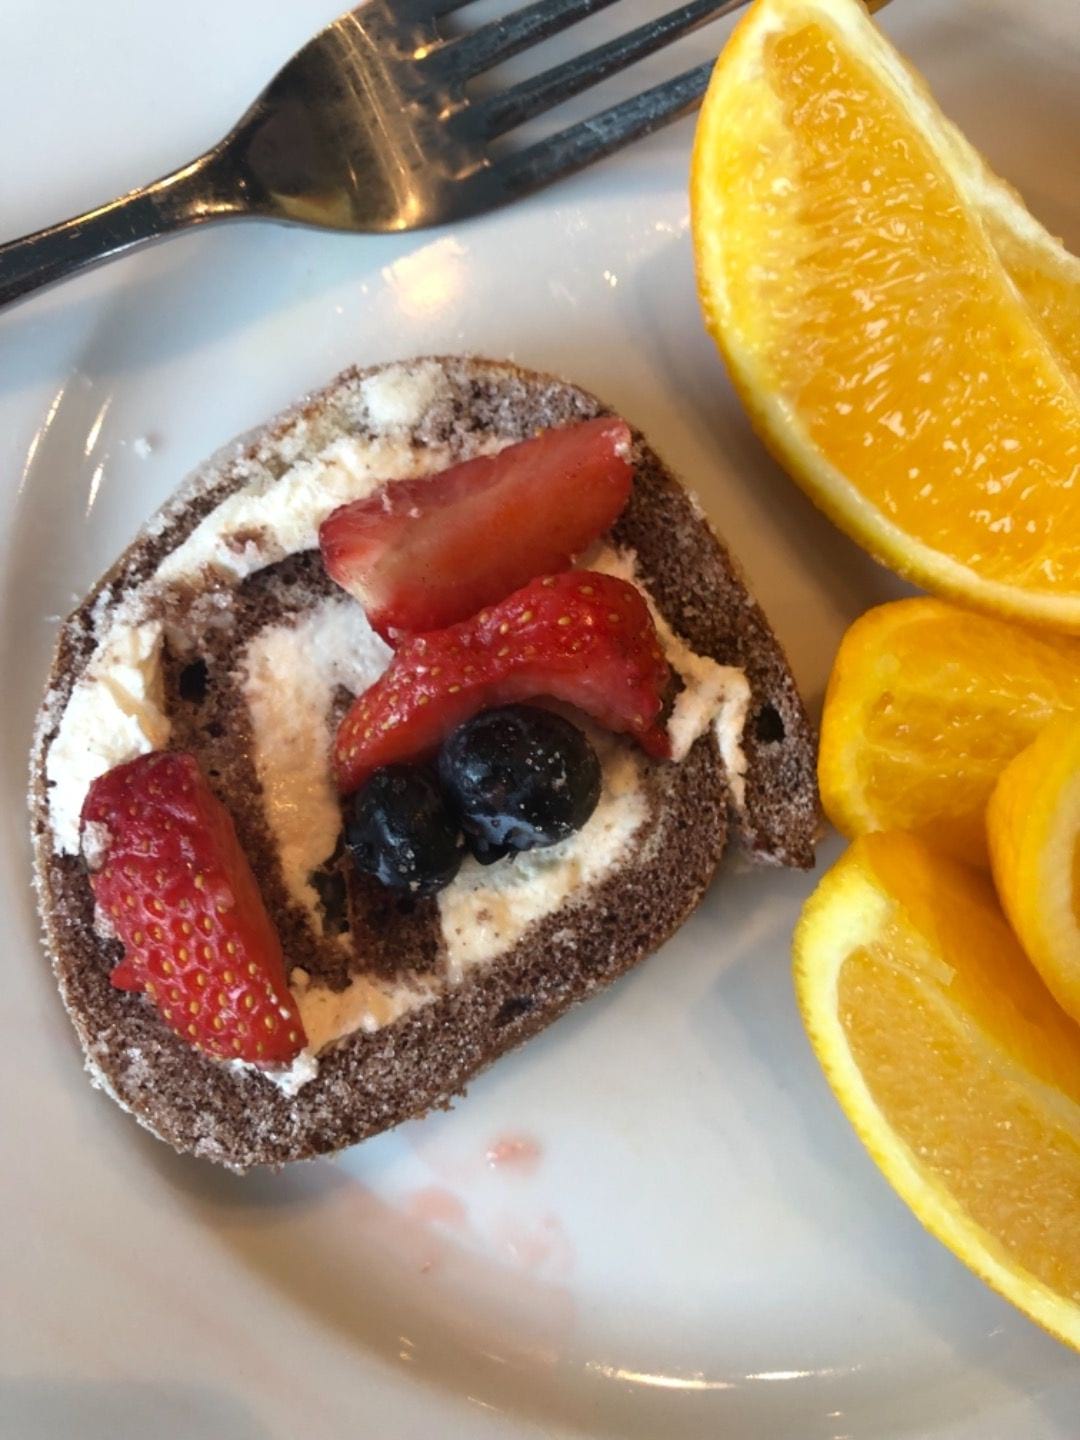 Rulltårta på frukosten  – Bild från Scandic Rubinen av Agnes L. (2019-09-24)